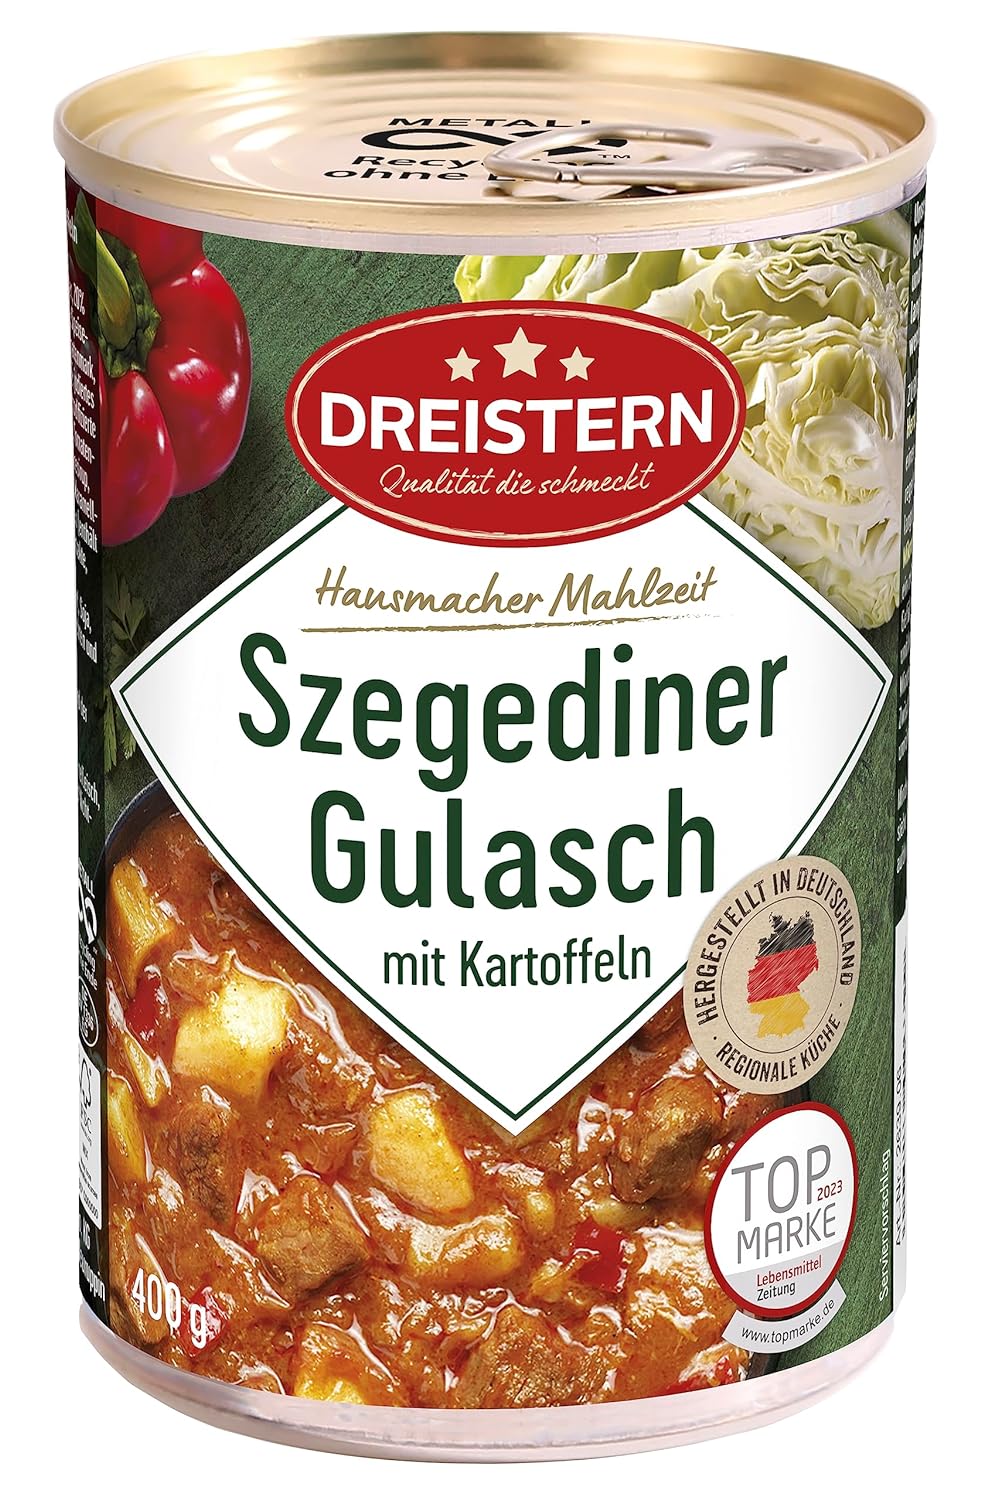 Szegediner Gulasch (Dreistern) 400g